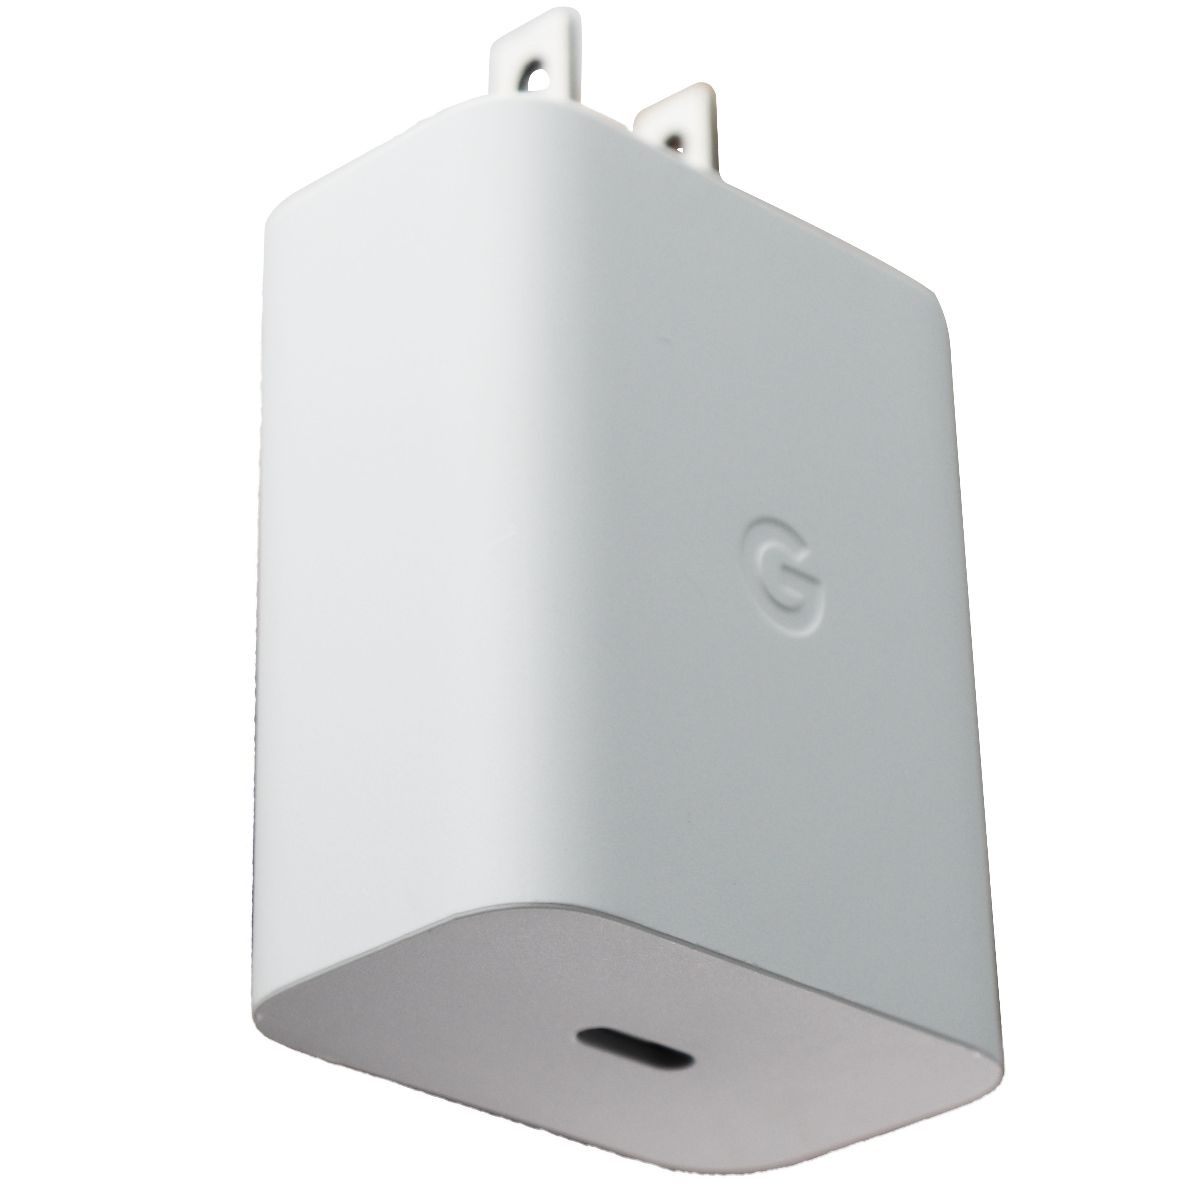 Google (30-Watt) Single USB-C Wall Charger Travel Adapter - White (G9BR1)